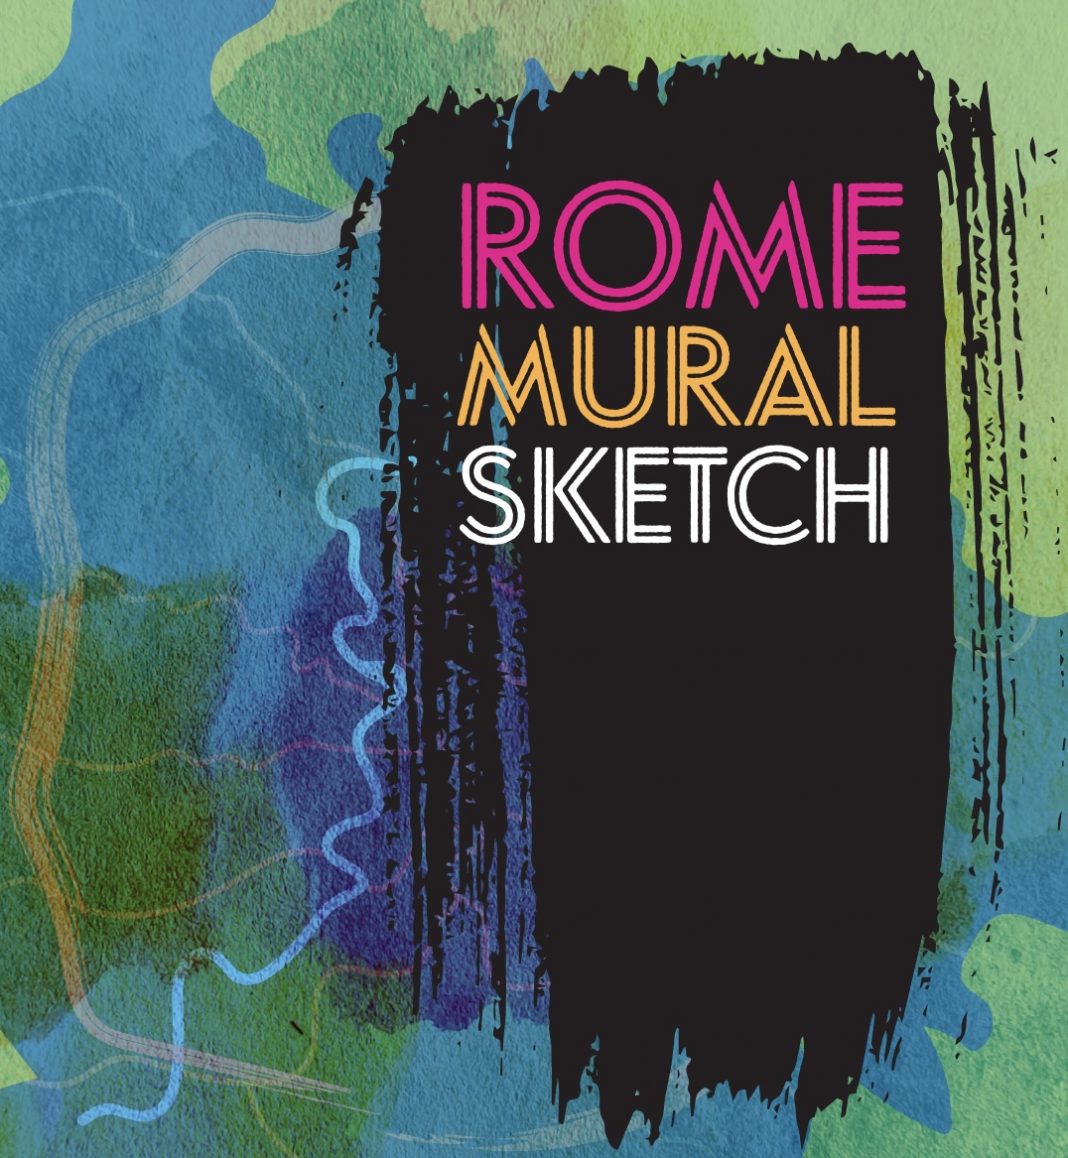 Rome Mural Sketch https://www.exibart.com/repository/media/formidable/11/img/734/Rome-Mural-Sketch-1068x1158.jpeg